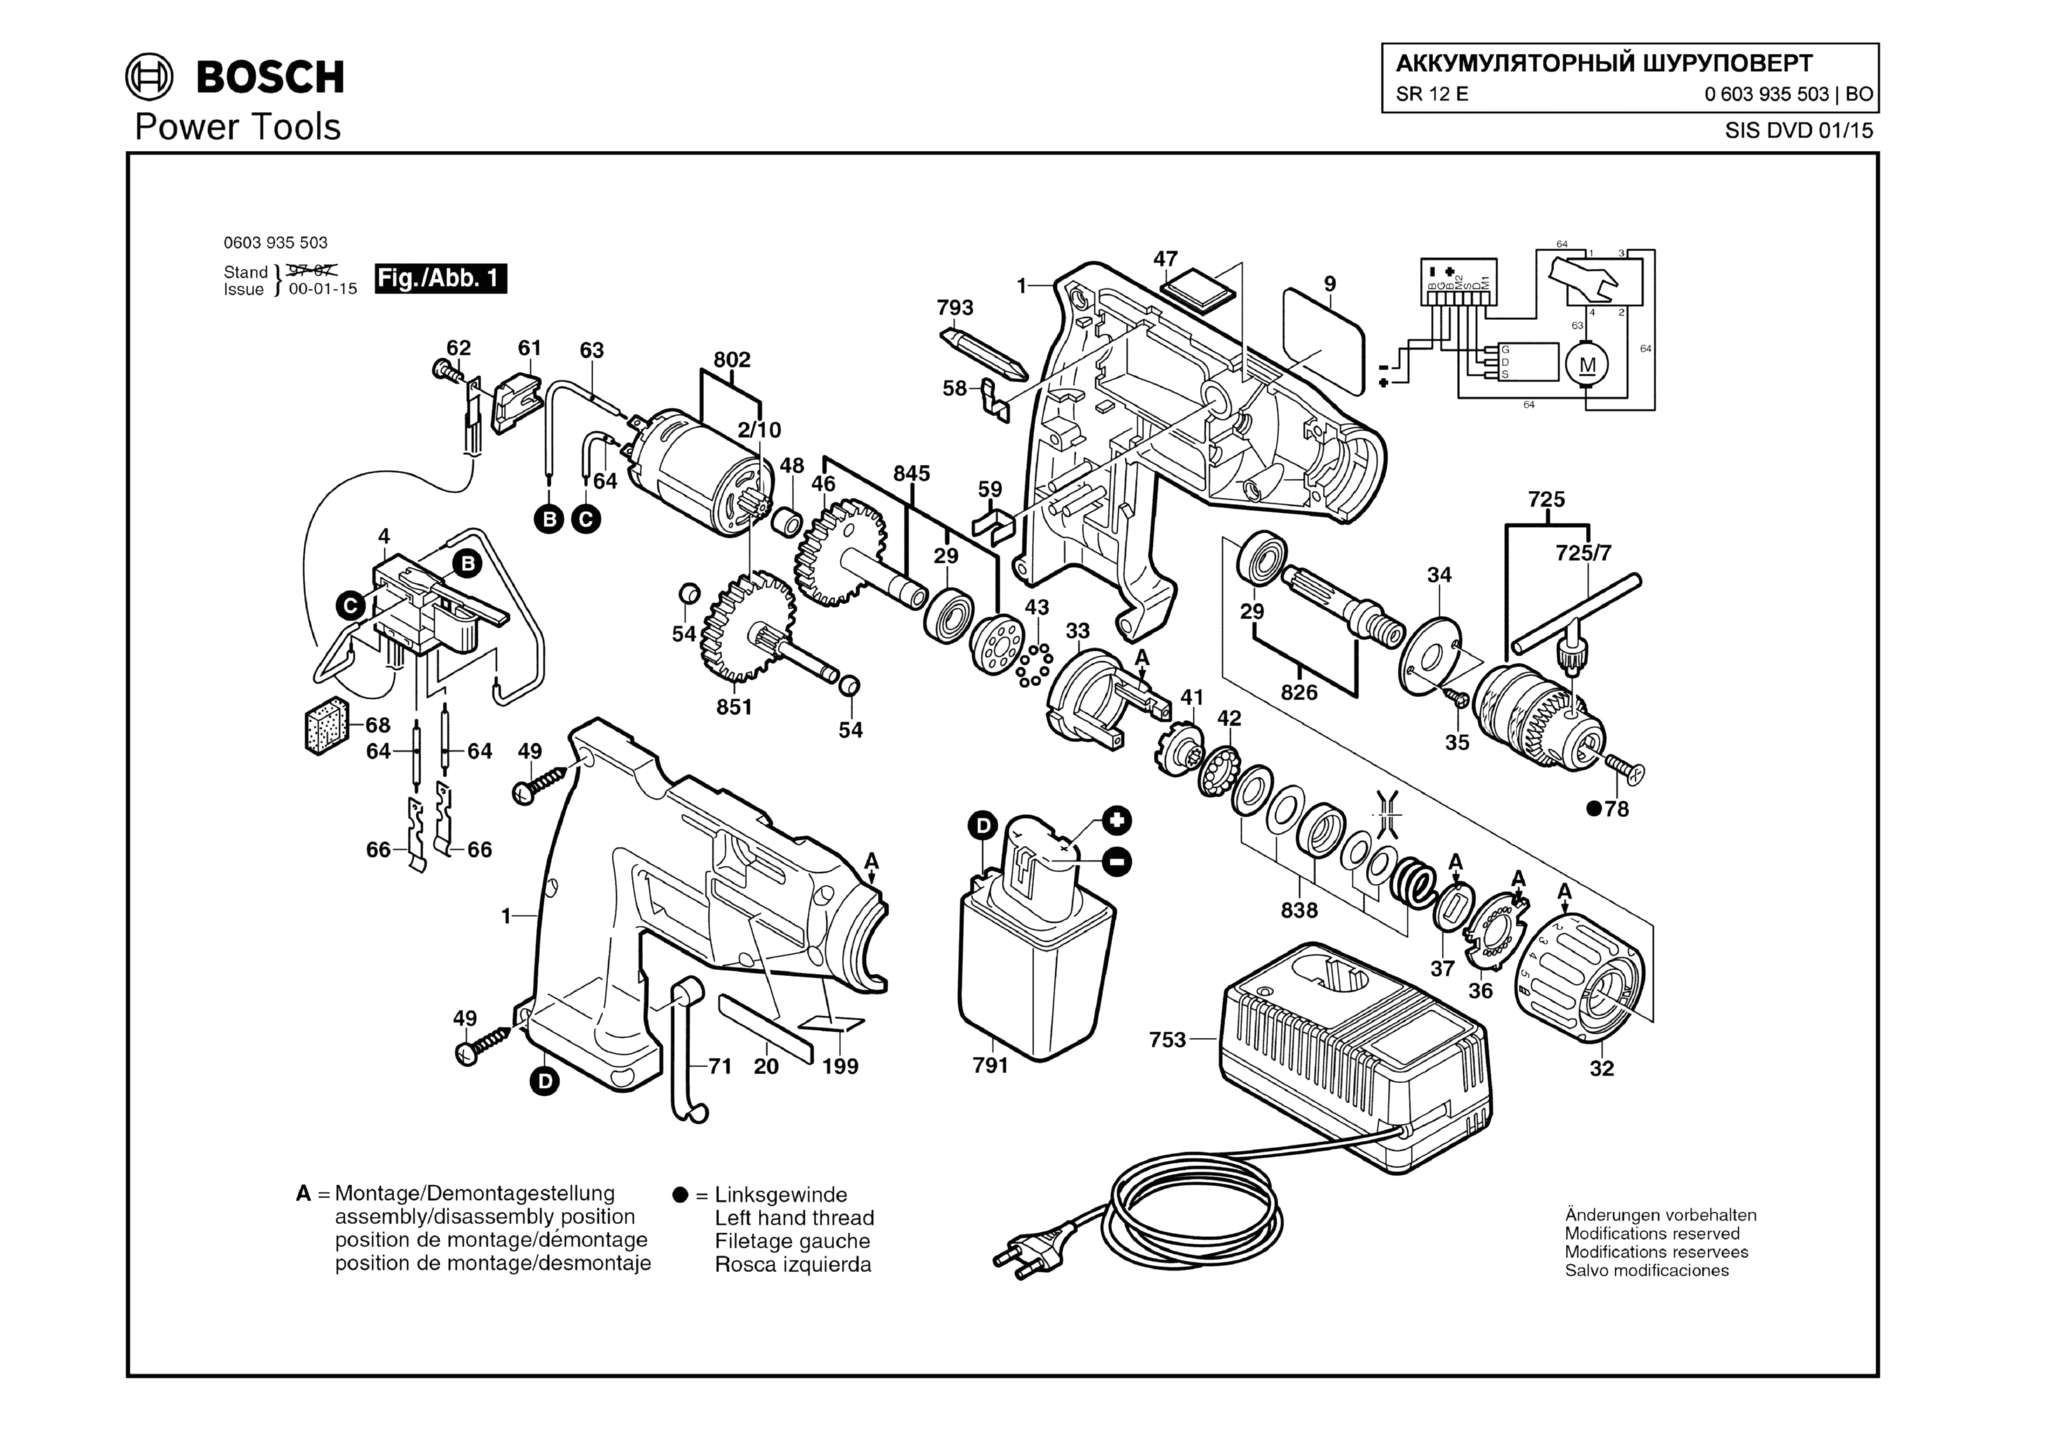 Запчасти, схема и деталировка Bosch SR 12 E (ТИП 0603935503)